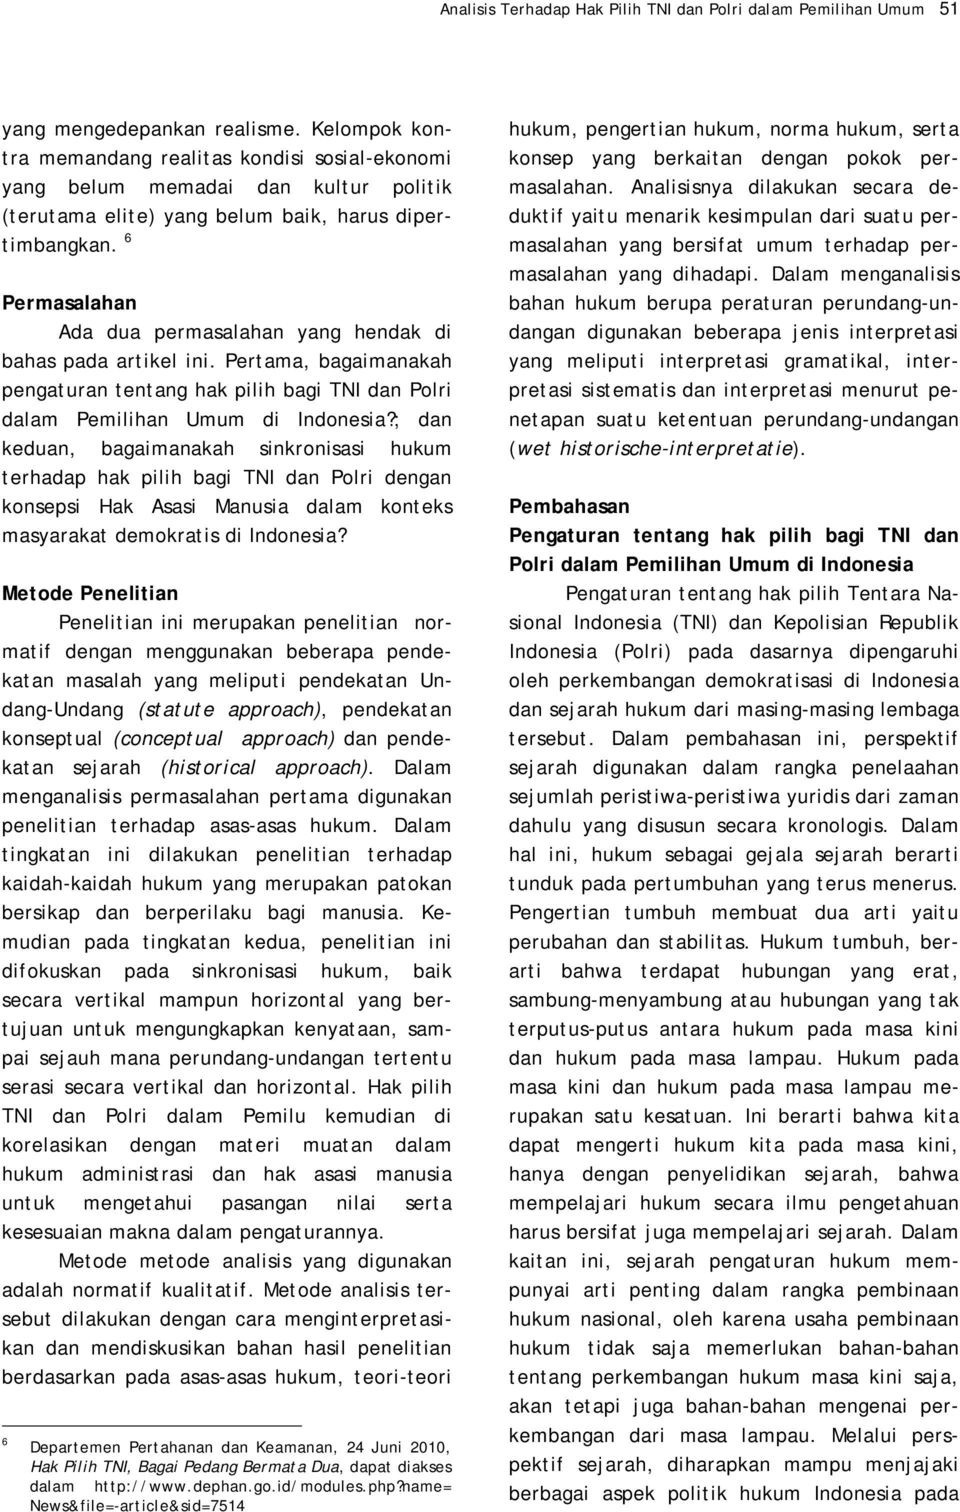 6 Permasalahan Ada dua permasalahan yang hendak di bahas pada artikel ini. Pertama, bagaimanakah pengaturan tentang hak pilih bagi TNI dan Polri dalam Pemilihan Umum di Indonesia?